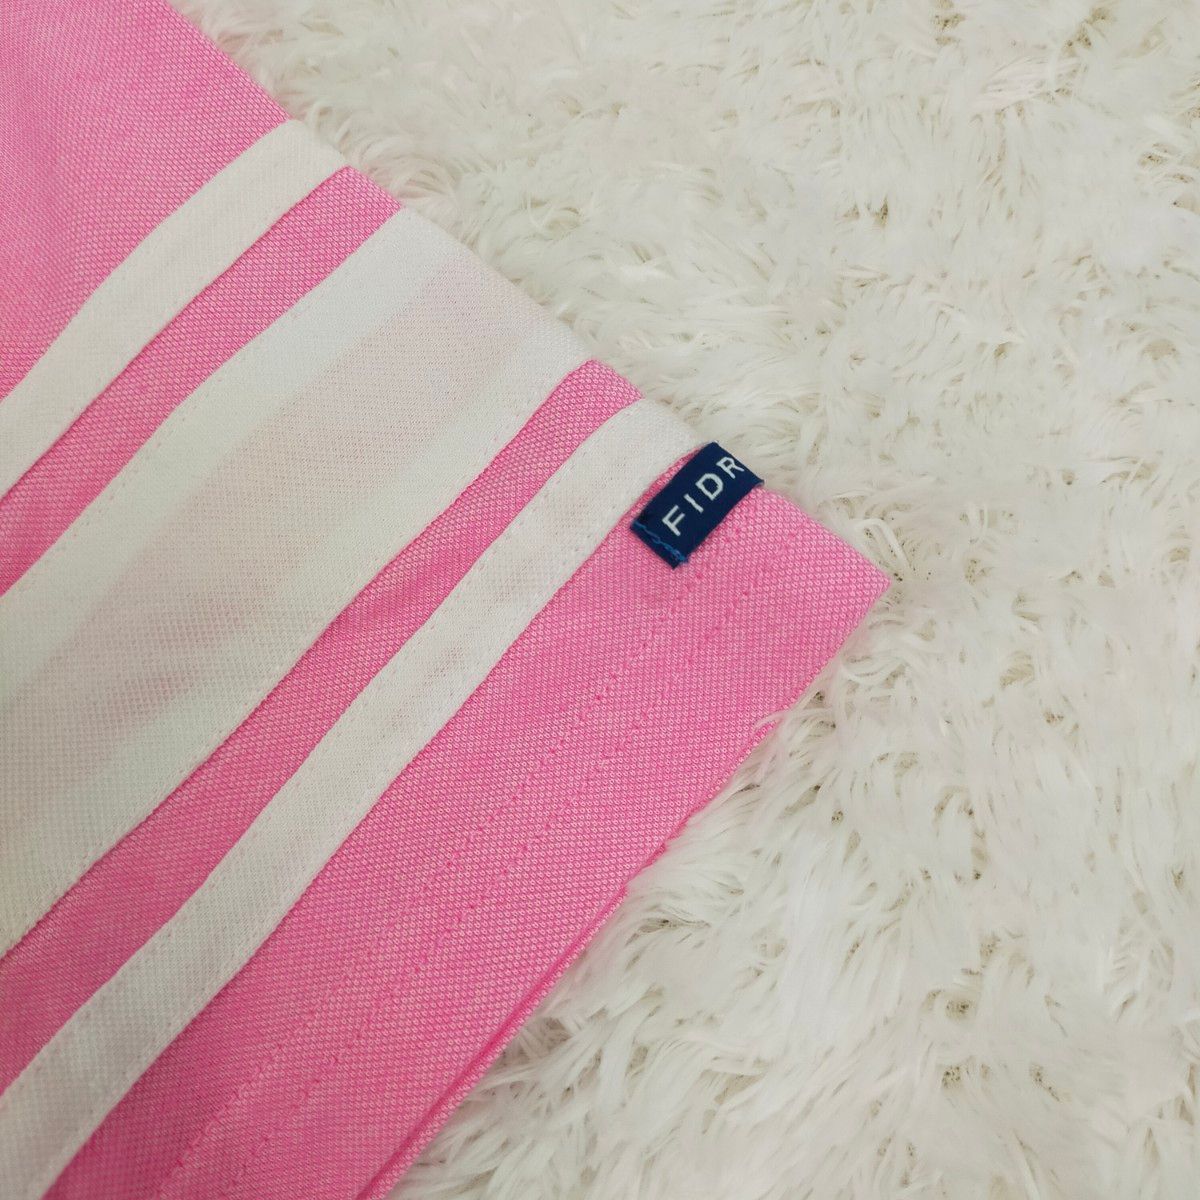 FIDRA フィドラ 春夏 ゴルフウェア ゴルフシャツ ポロシャツ 半袖 ピンク色 吸汗速乾ドライ ストレッチ レディース M